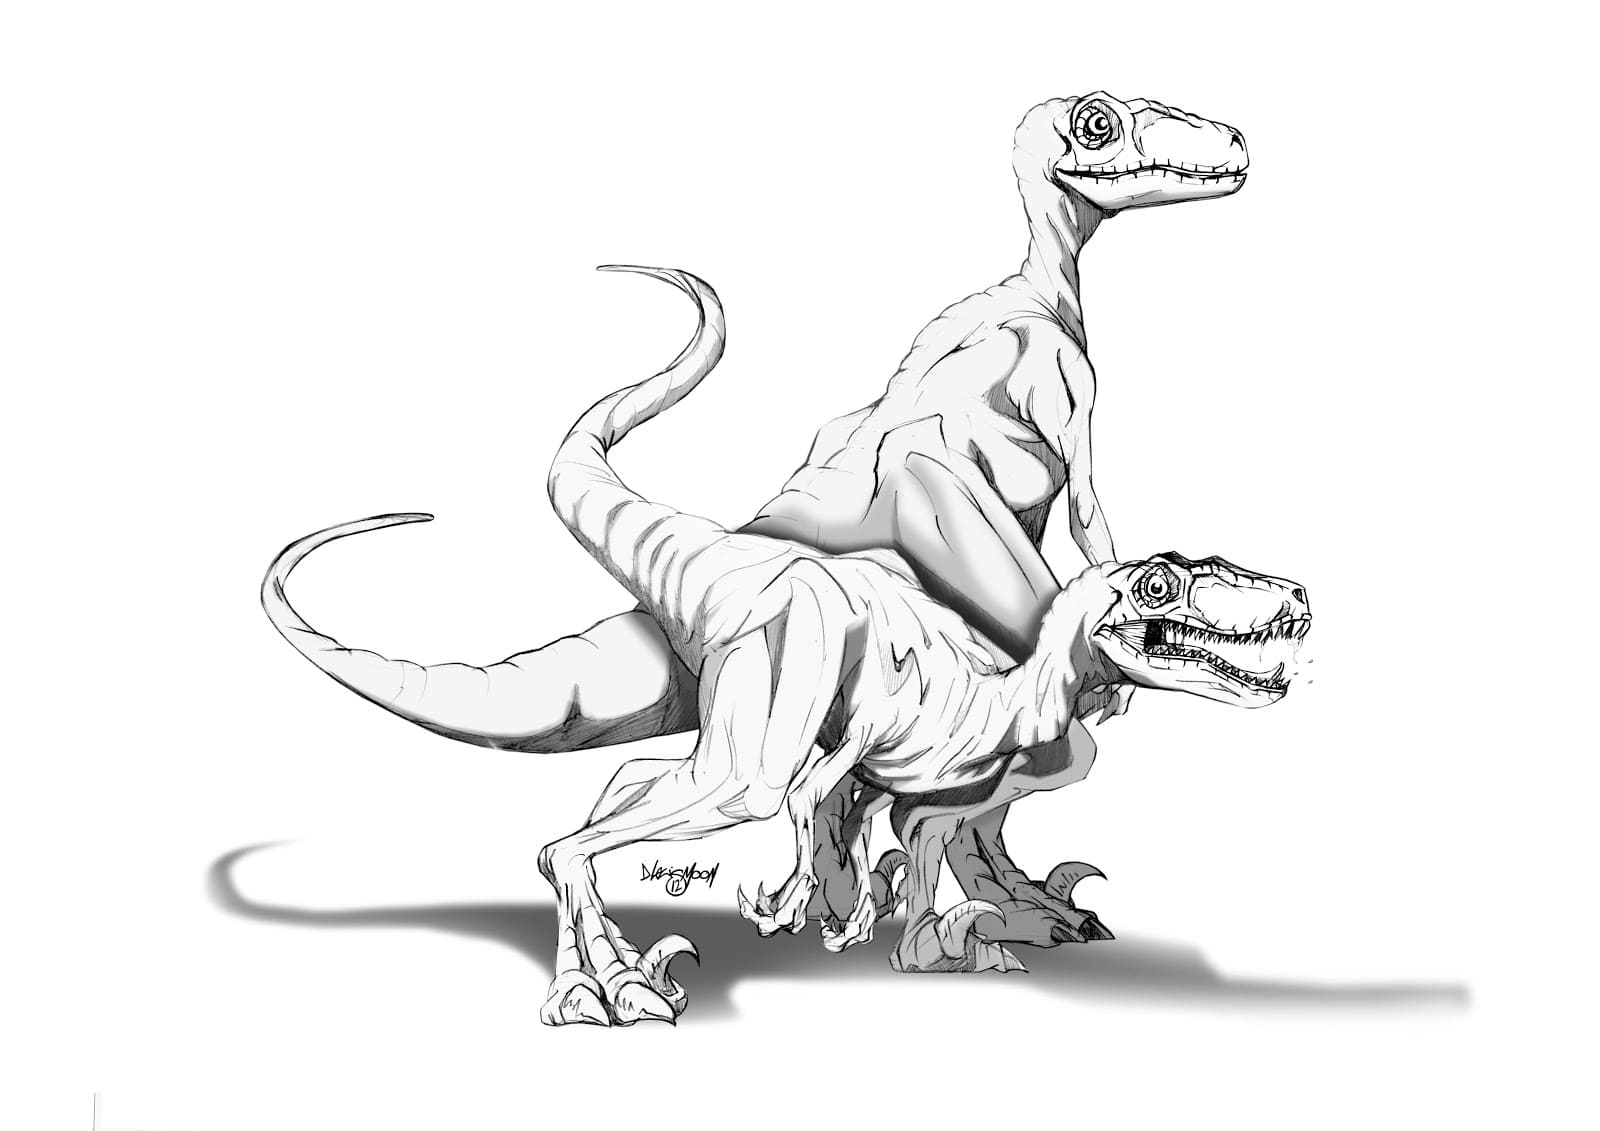 Two Raptor Image